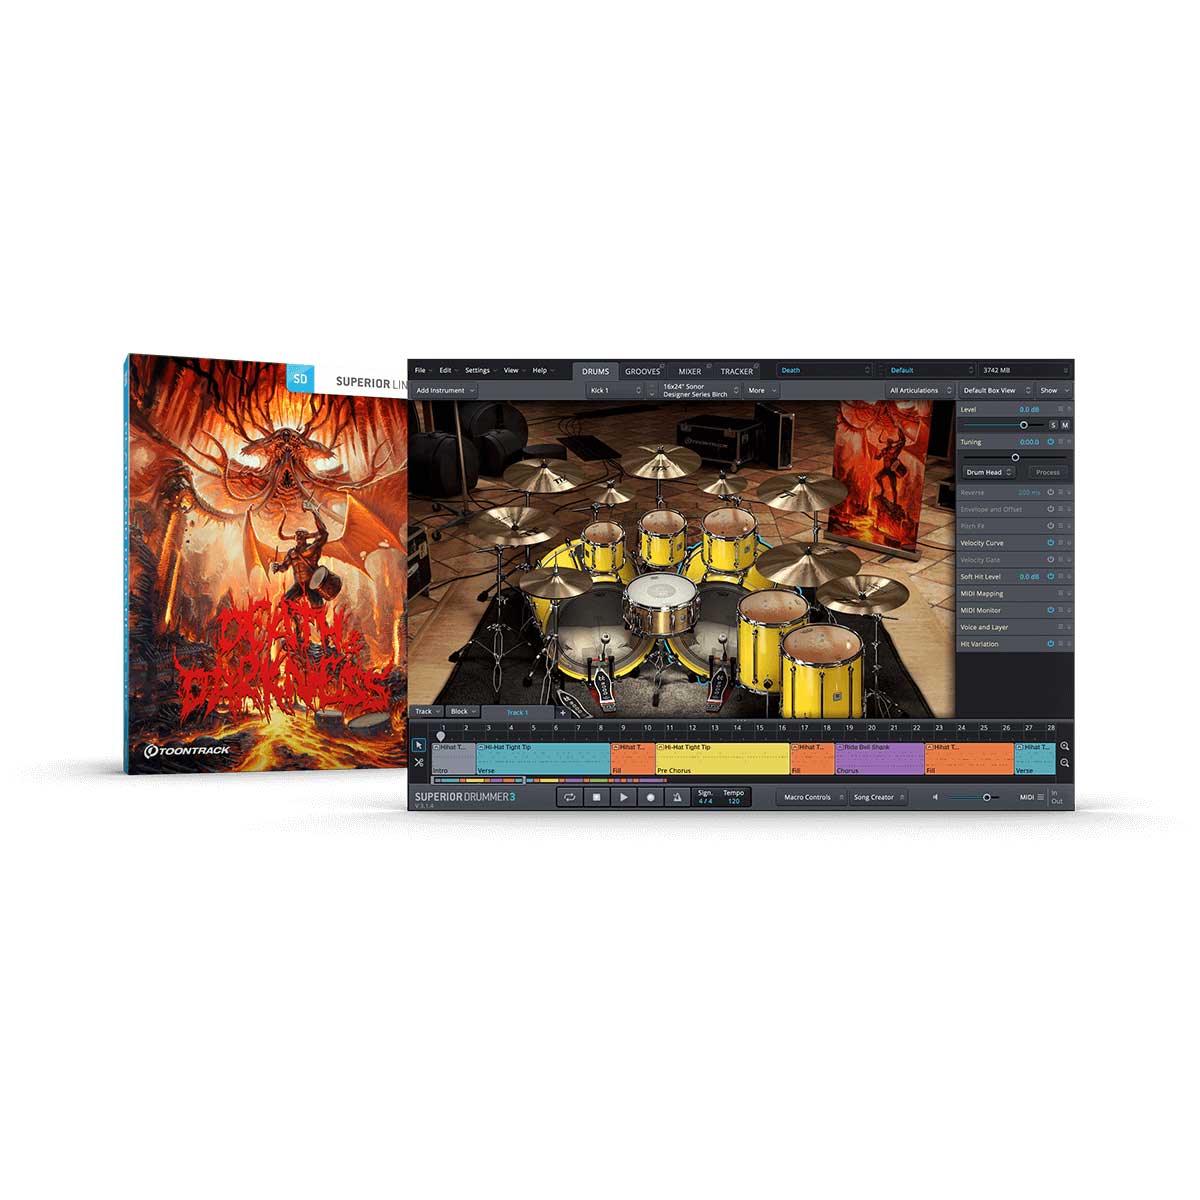 Toontrack Death & Darkness SDX - Superior Drummer Sound Expansion (Software Serial Number)